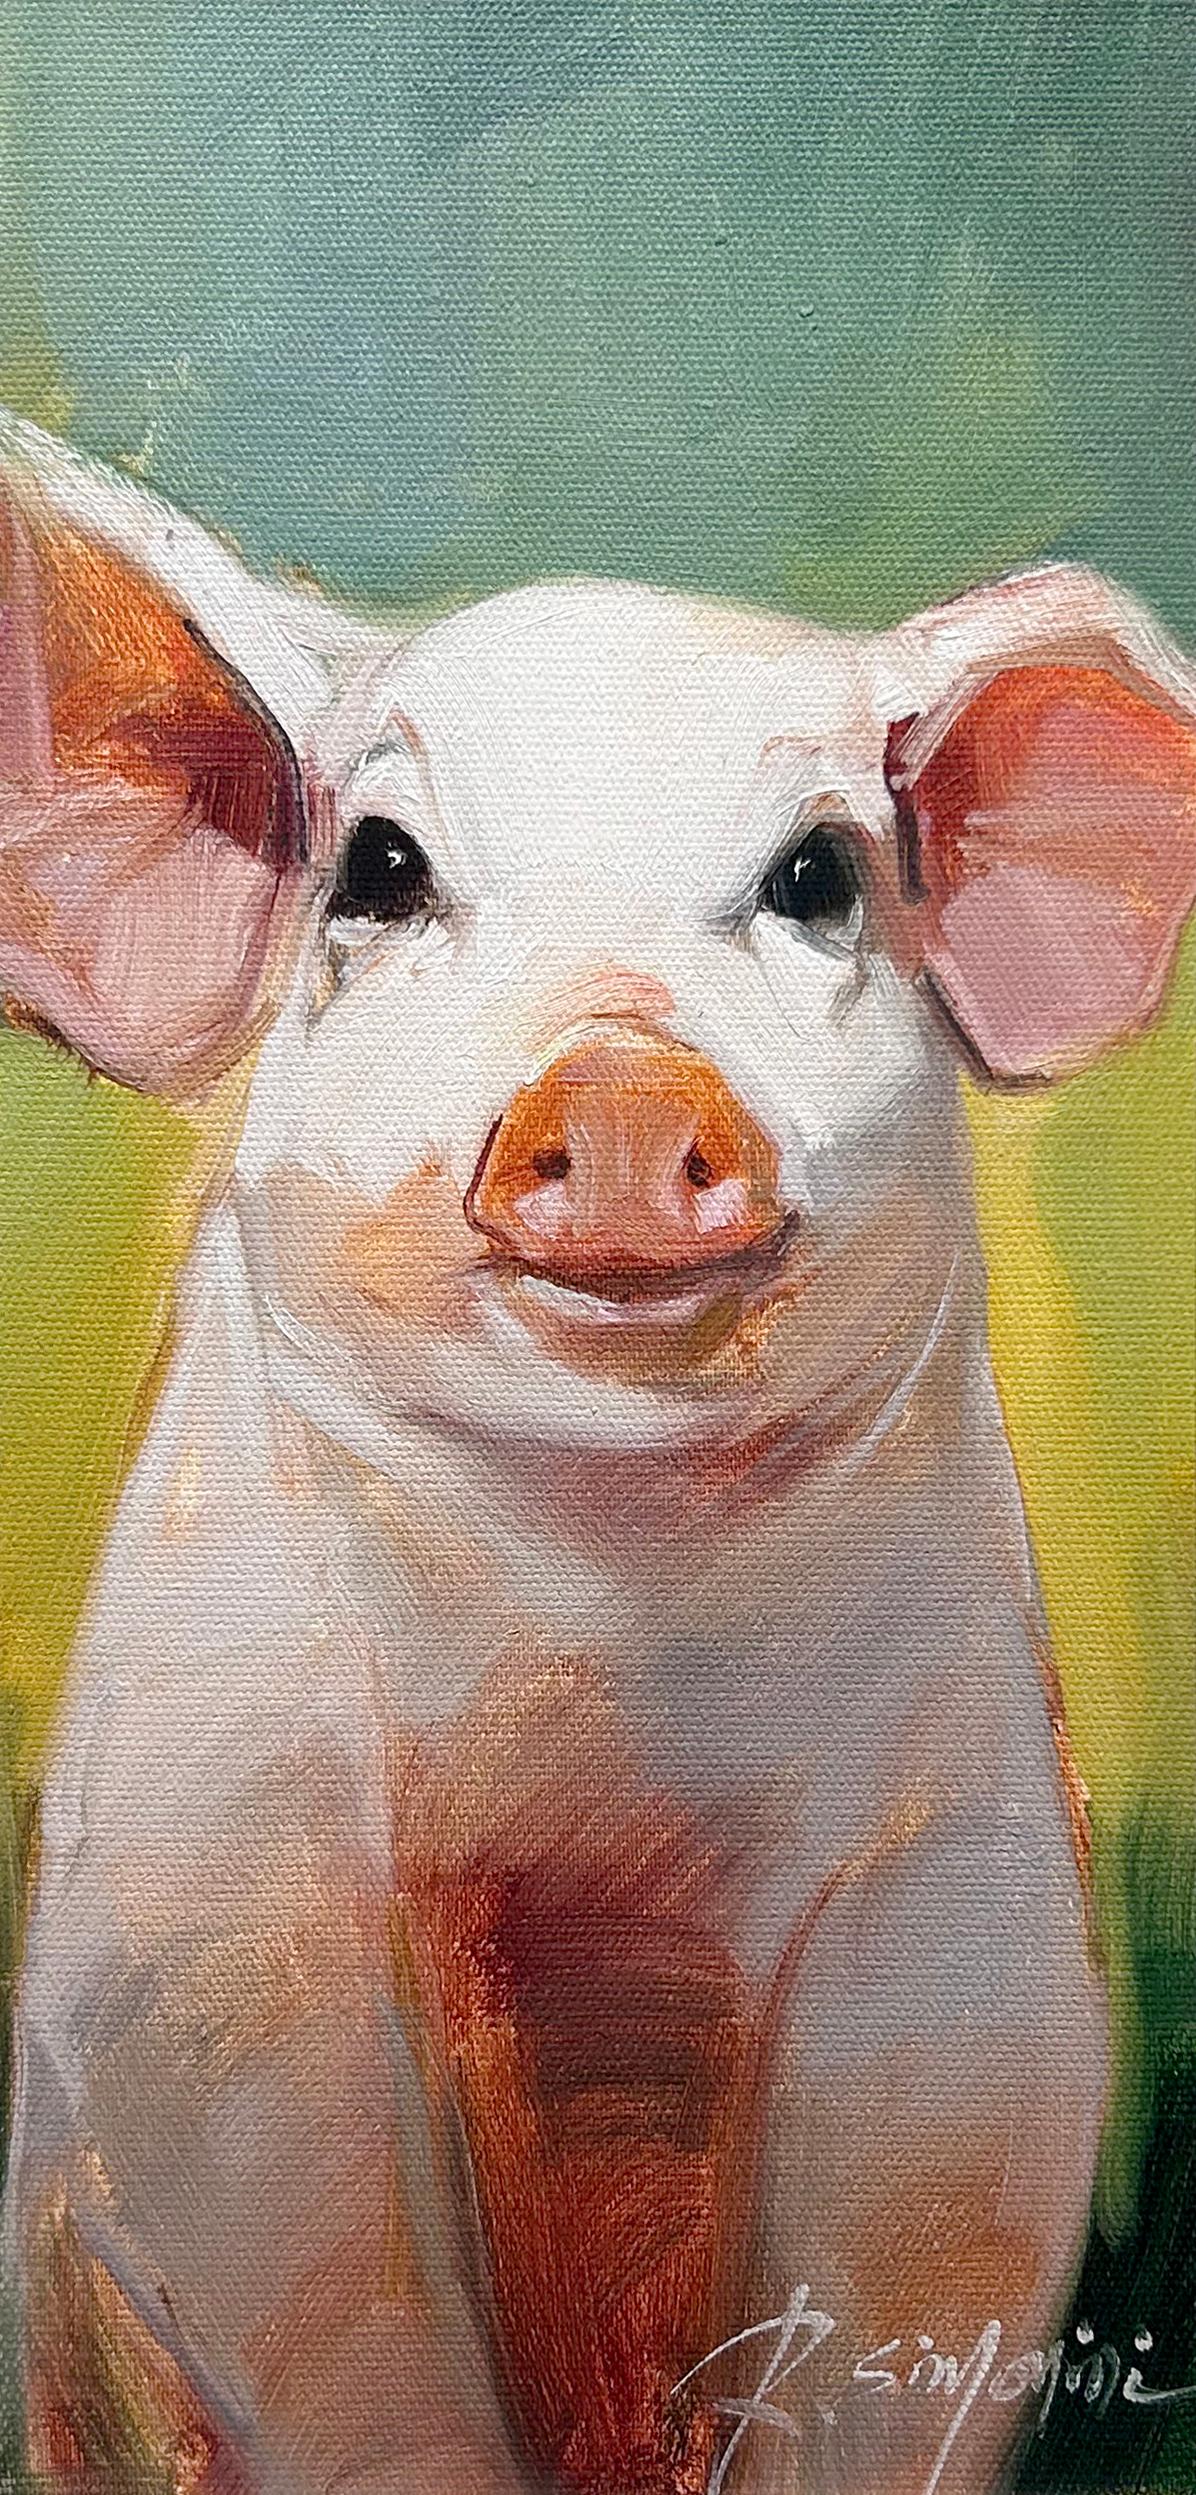 Ray Simonini, "Penny" 16x8 Impressionniste Pig Farm Animal Oil Painting on Canvas